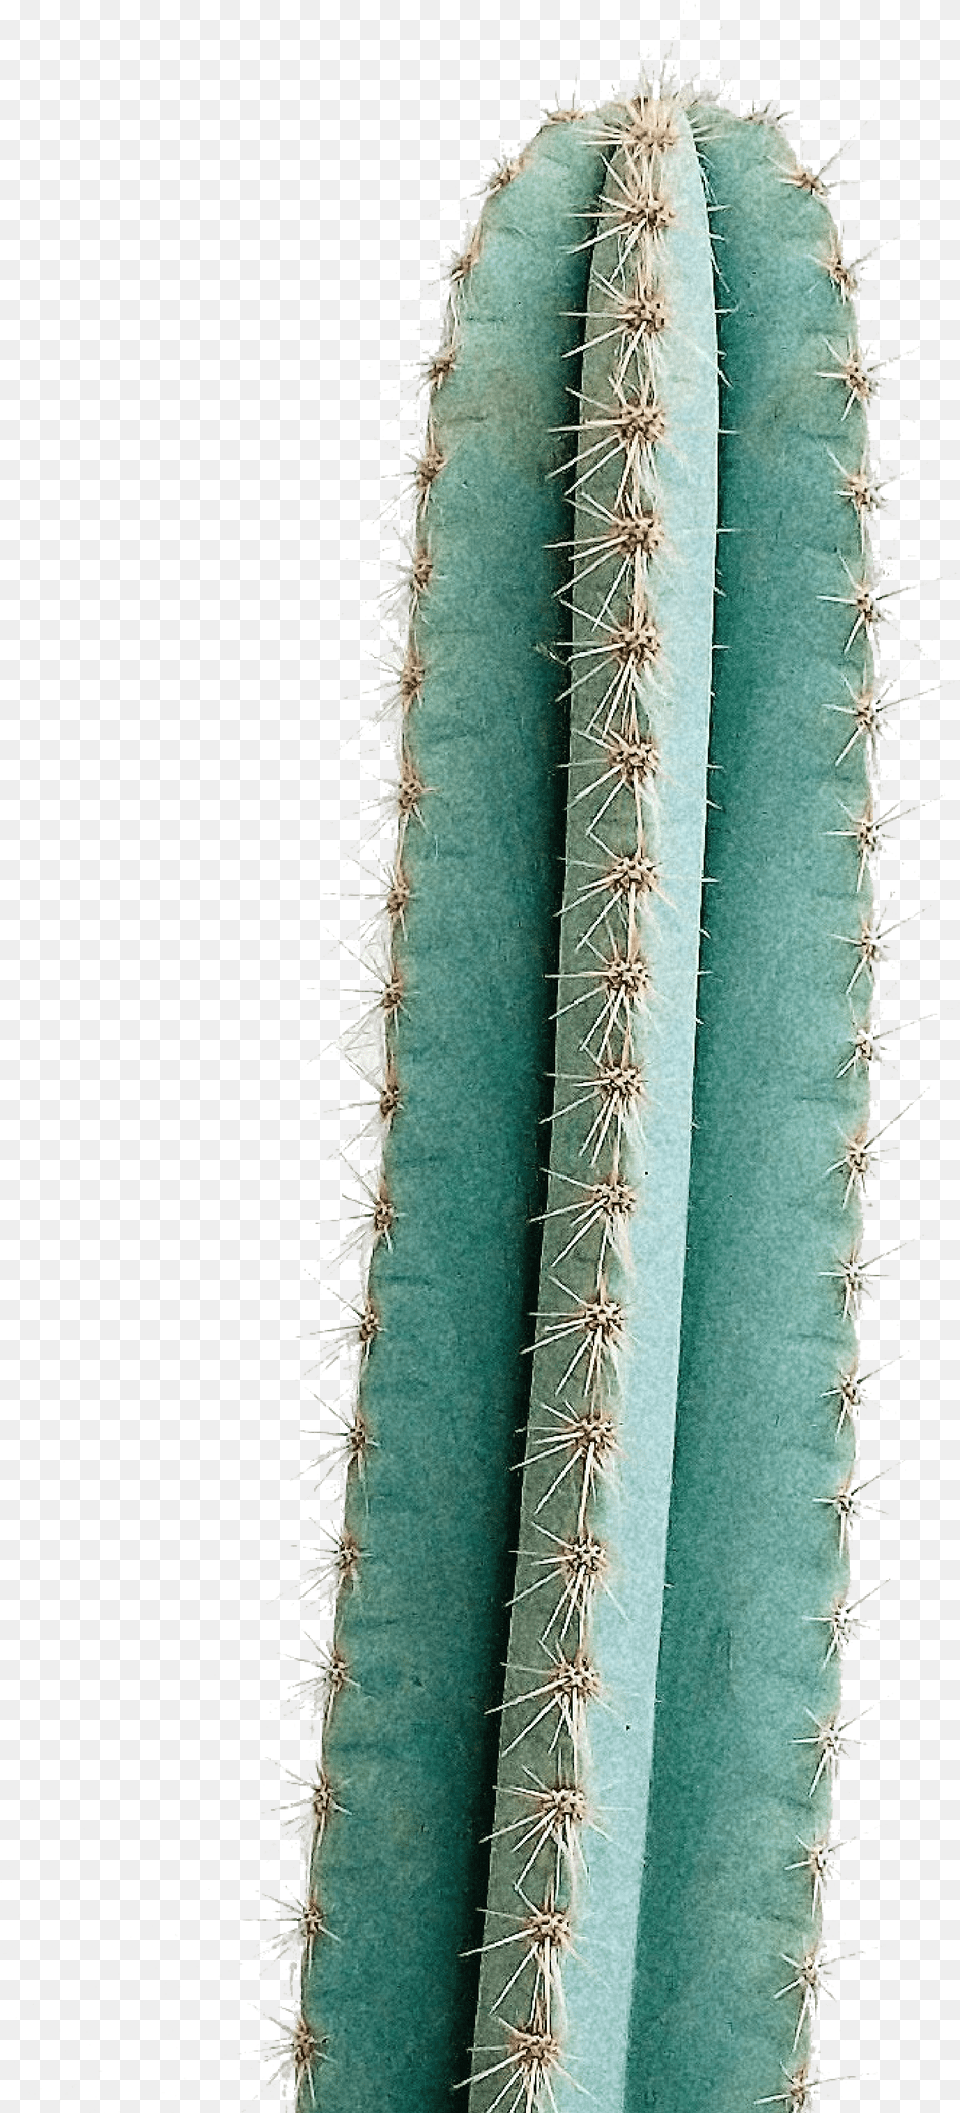 The Land San Pedro Cactus, Plant Png Image